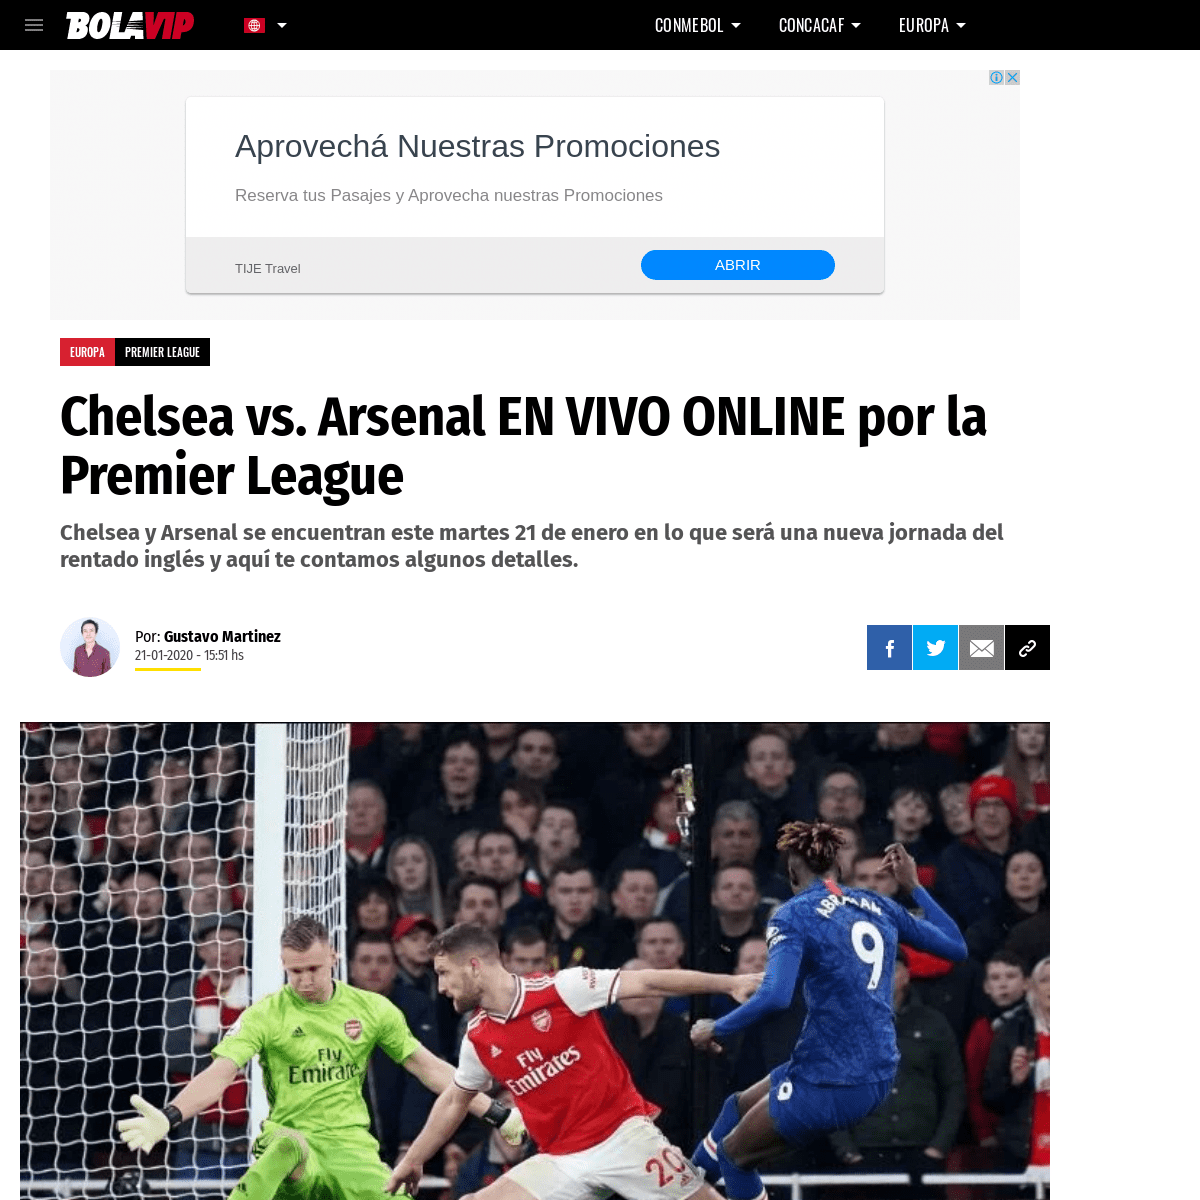 A complete backup of bolavip.com/europa/Chelsea-vs.-Arsenal-EN-VIVO-ONLINE-por-la-Premier-League-F22-20200121-0129.html